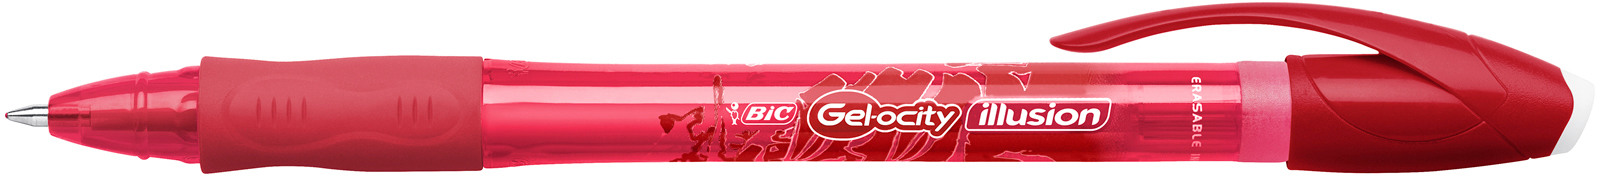 BIC Gel-ocity Illusion 943442 rouge, erasable 0.3mm